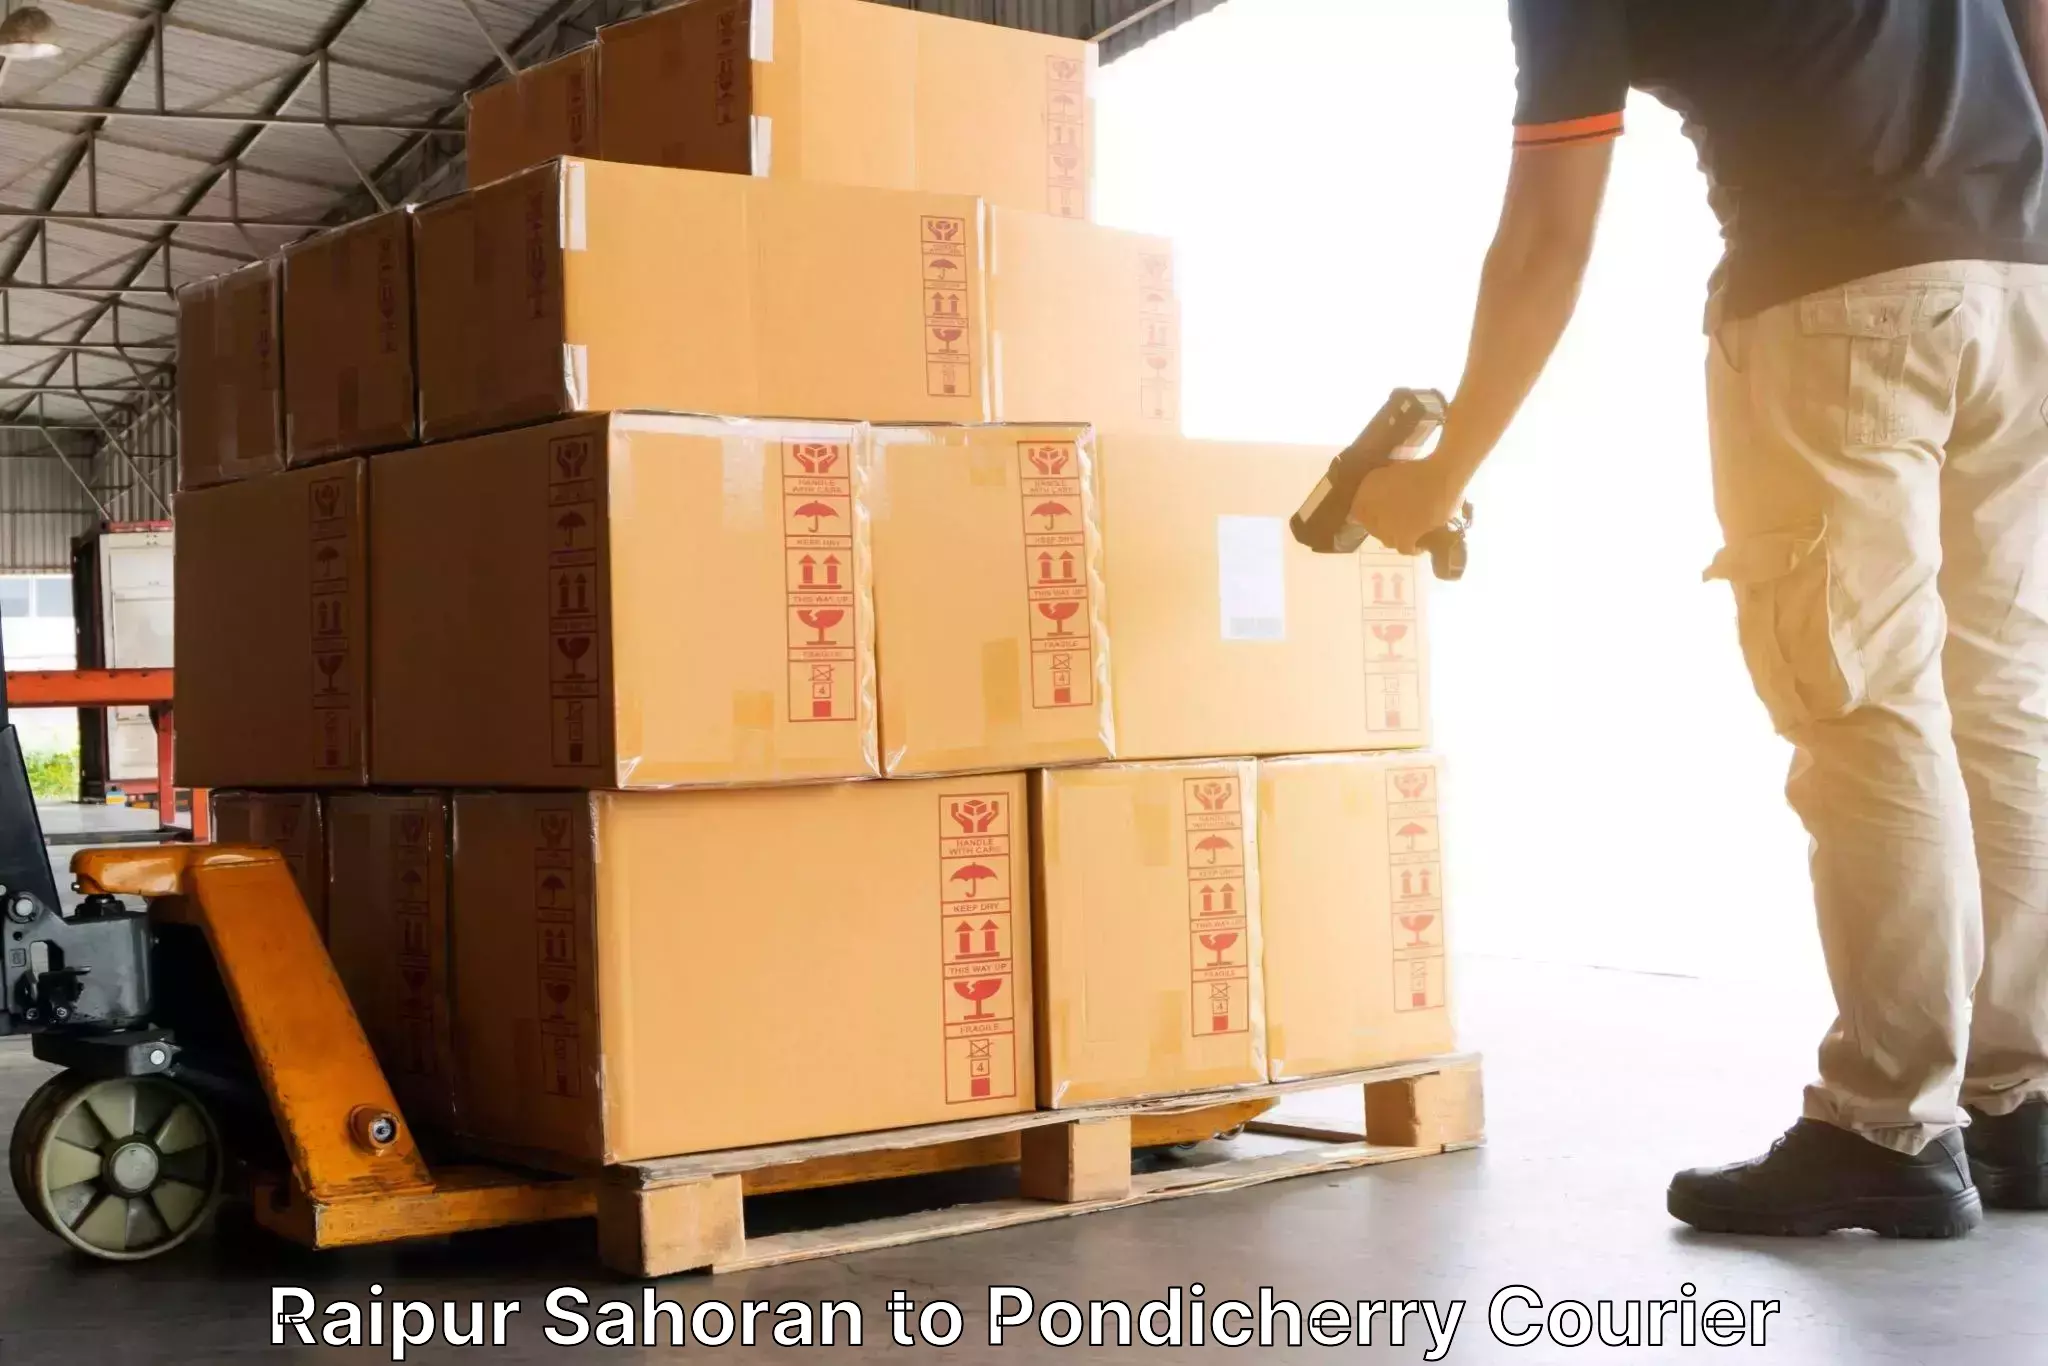 Courier service efficiency Raipur Sahoran to Karaikal